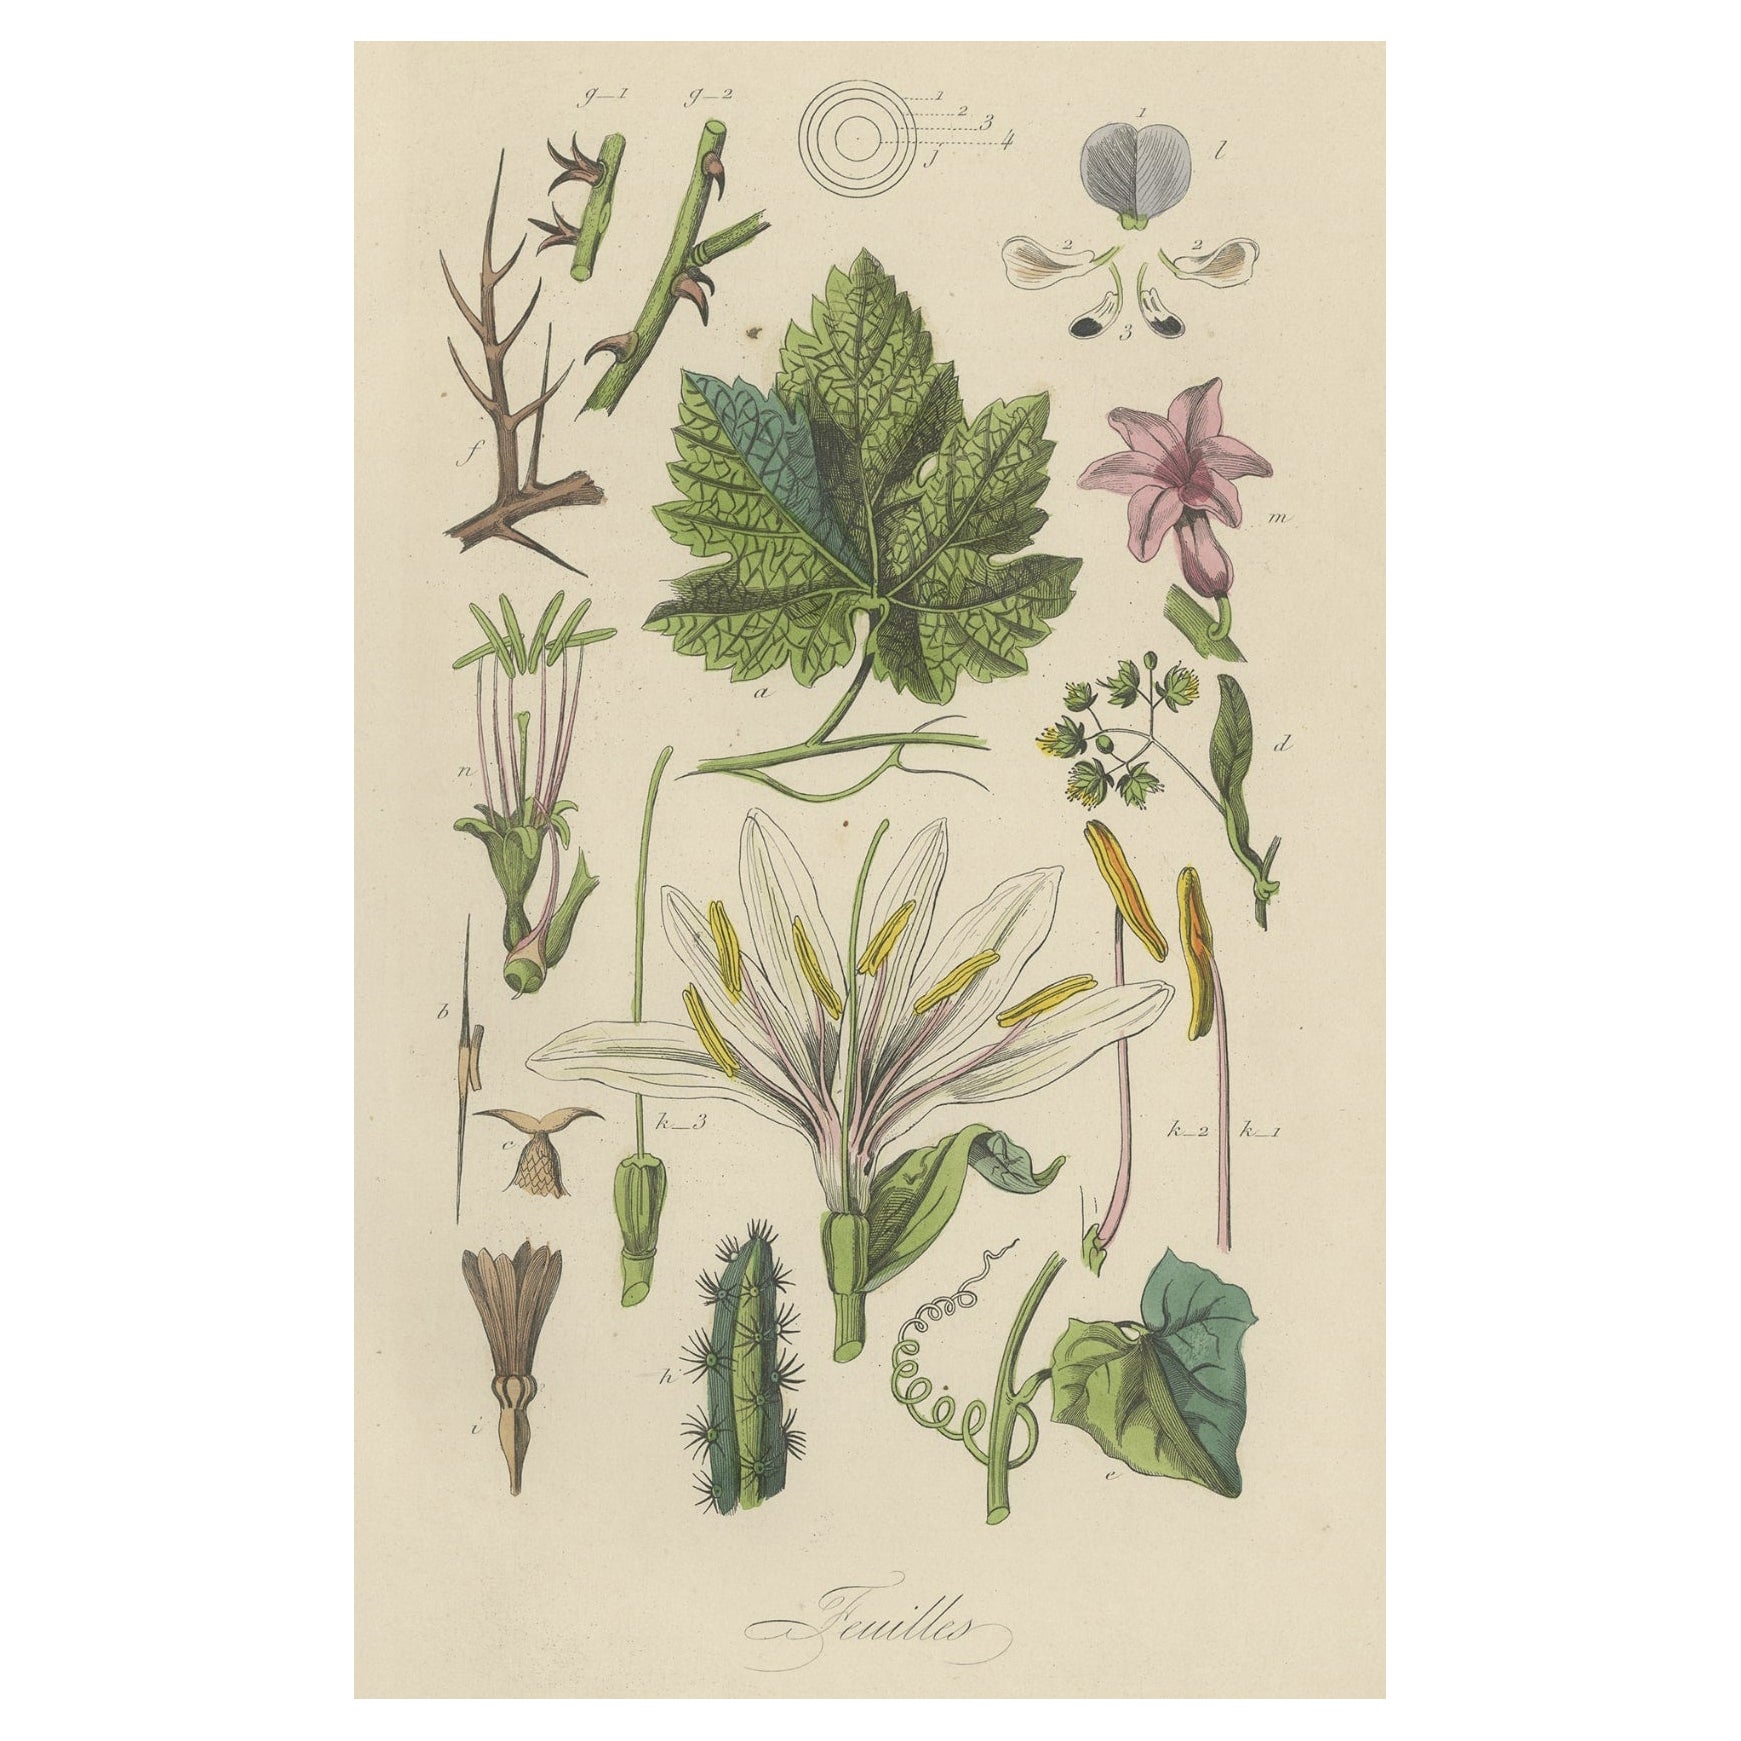 Decorative Antique Print of Various Leaves for a Gardener or Garden Lover, 1854